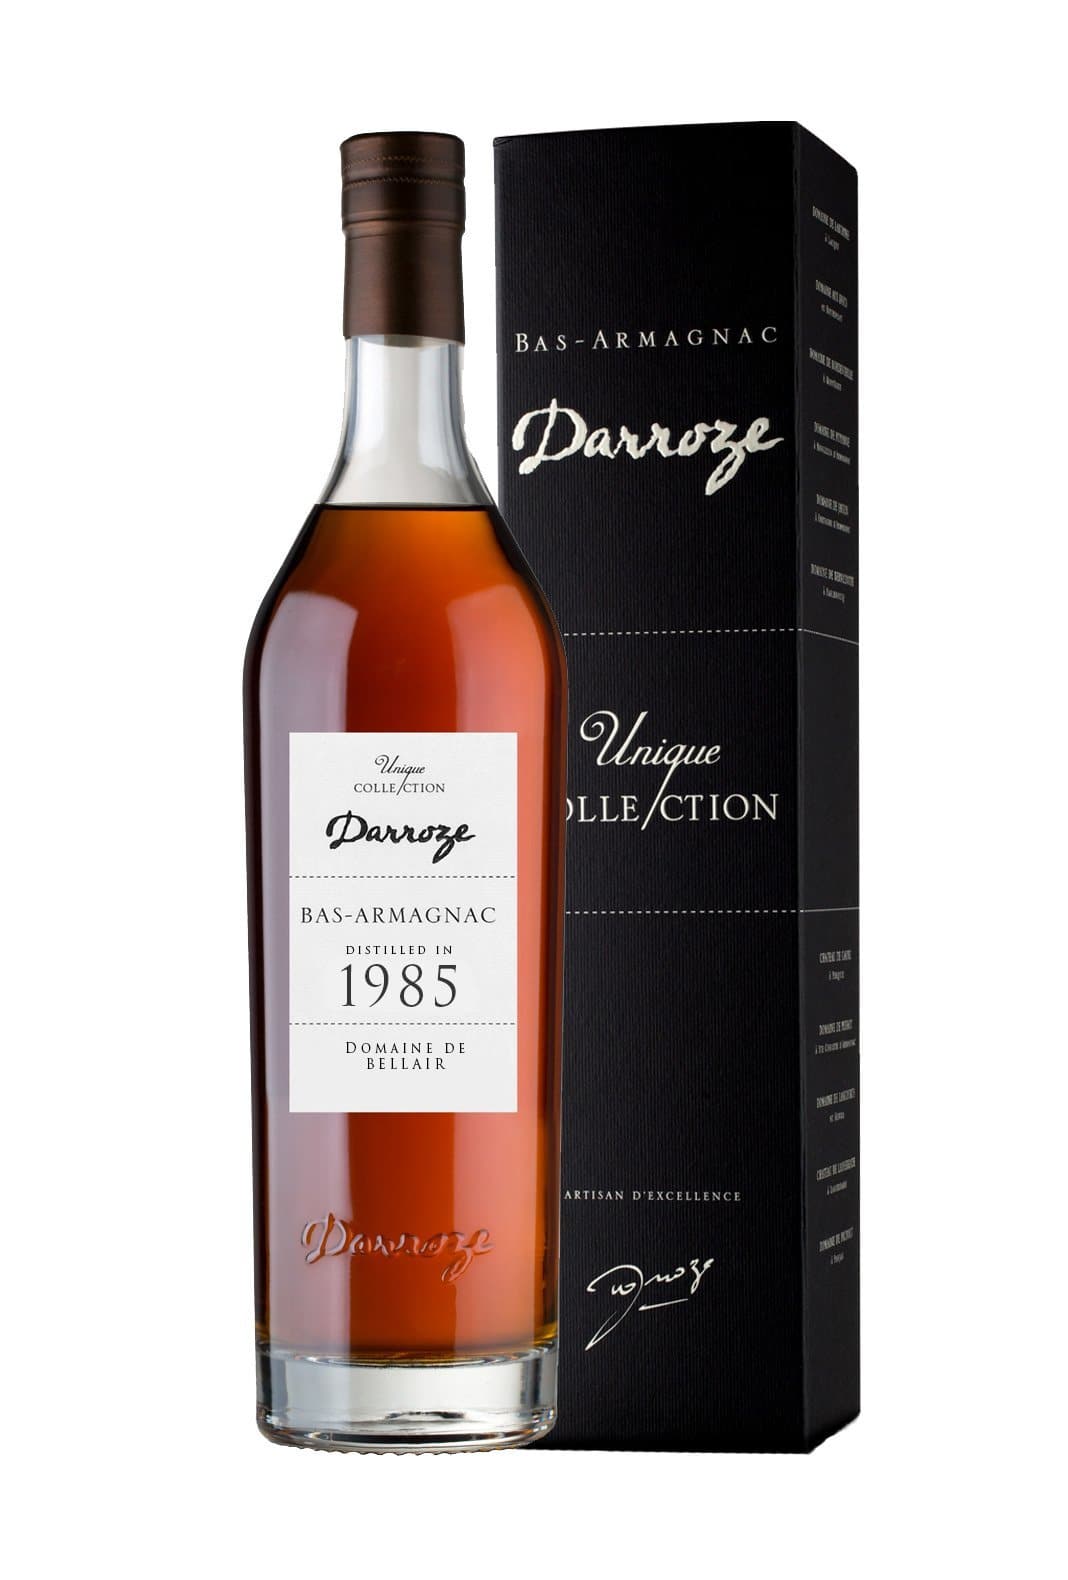 Darroze 1985 Bellair Grand Bas Armagnac 43.5% 700ml | Brandy | Shop online at Spirits of France